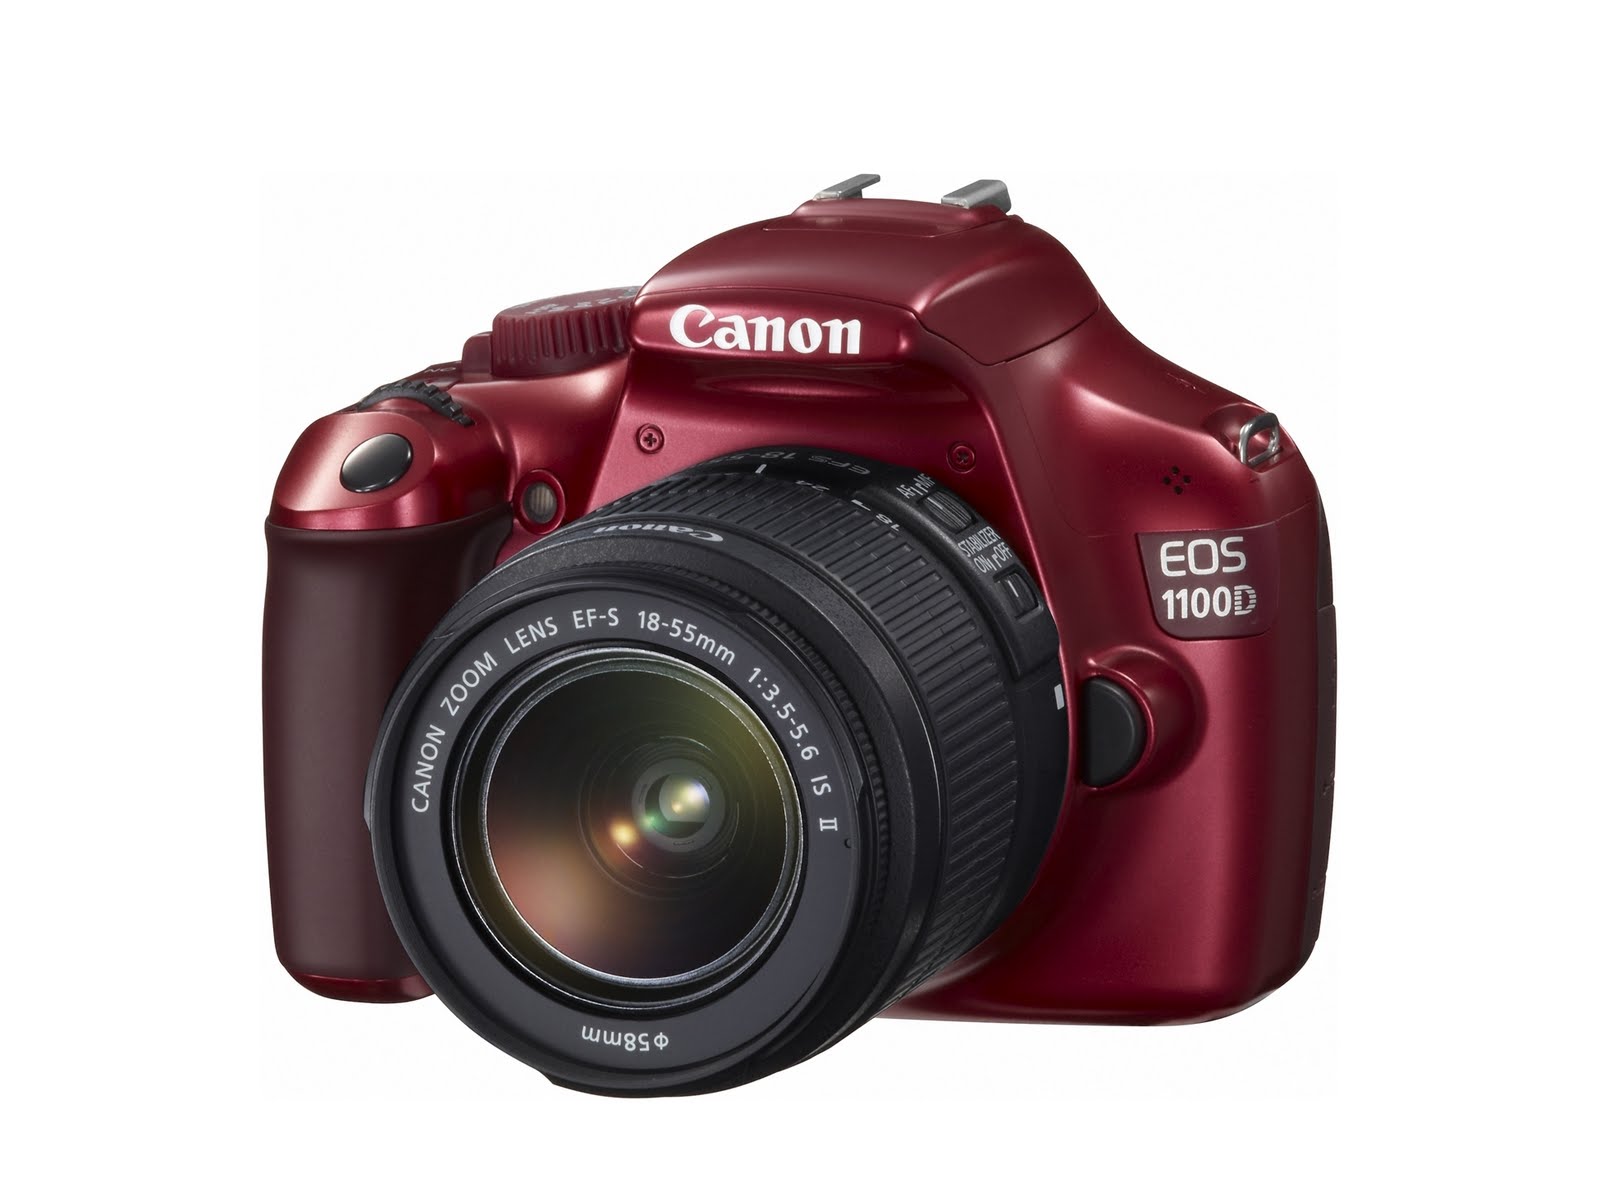 Canon EOS 1100D / Rebel T3 DSLR Camera Technical Specs